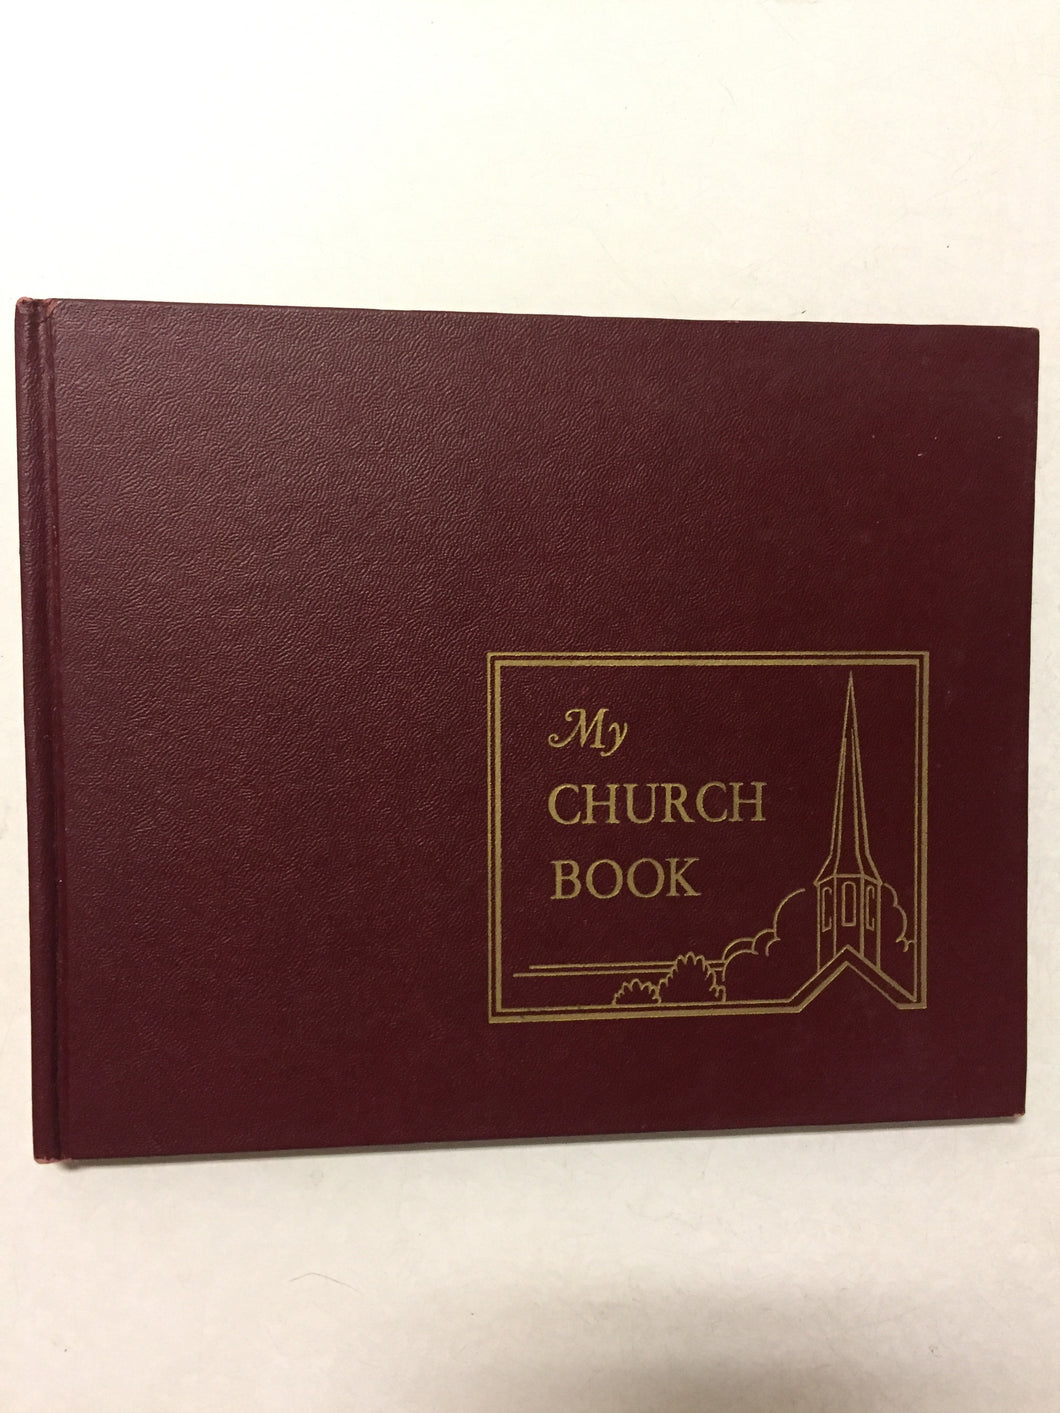 My Church Book